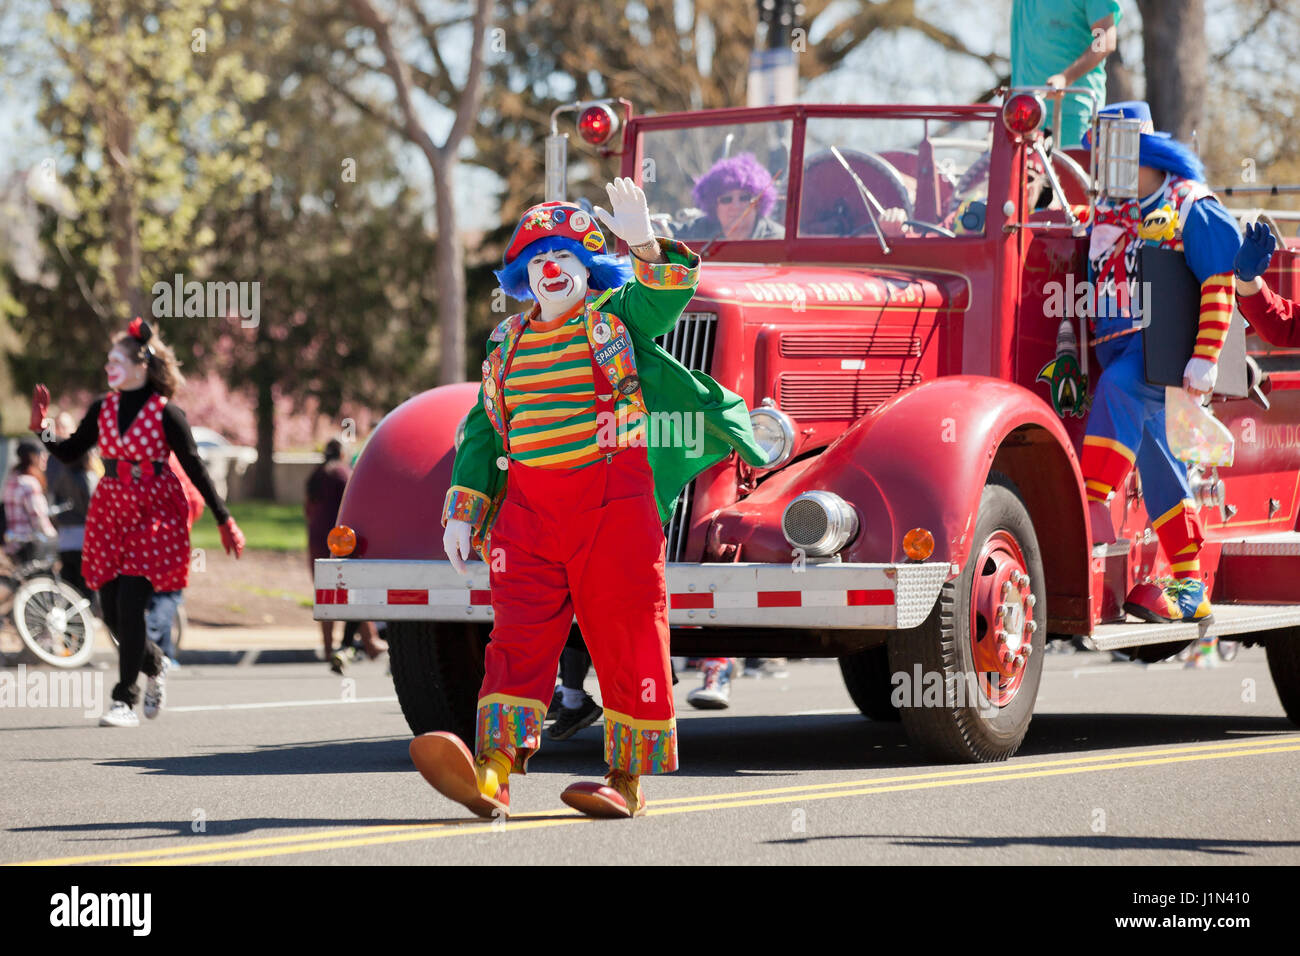 Clowns on firetruck during a street parade - USA Stock Photo